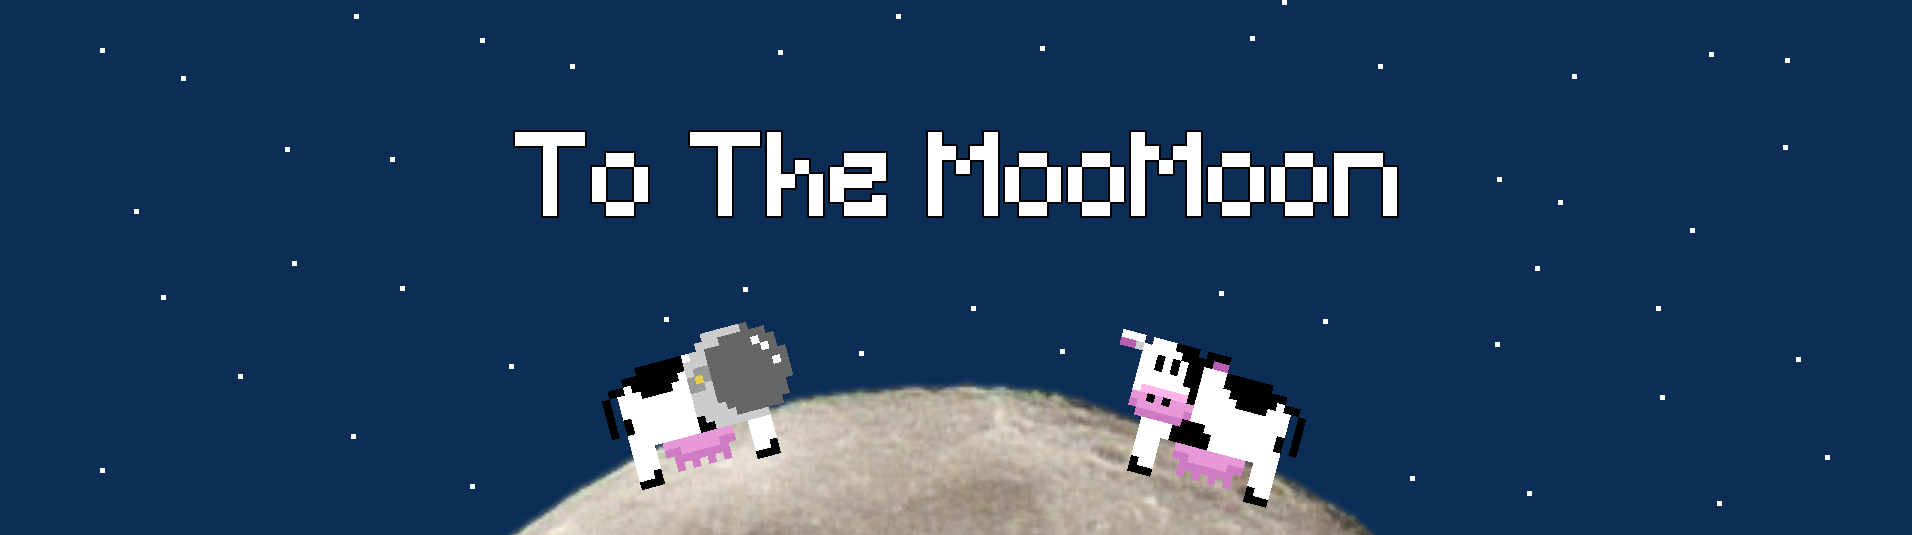 To The MooMoon